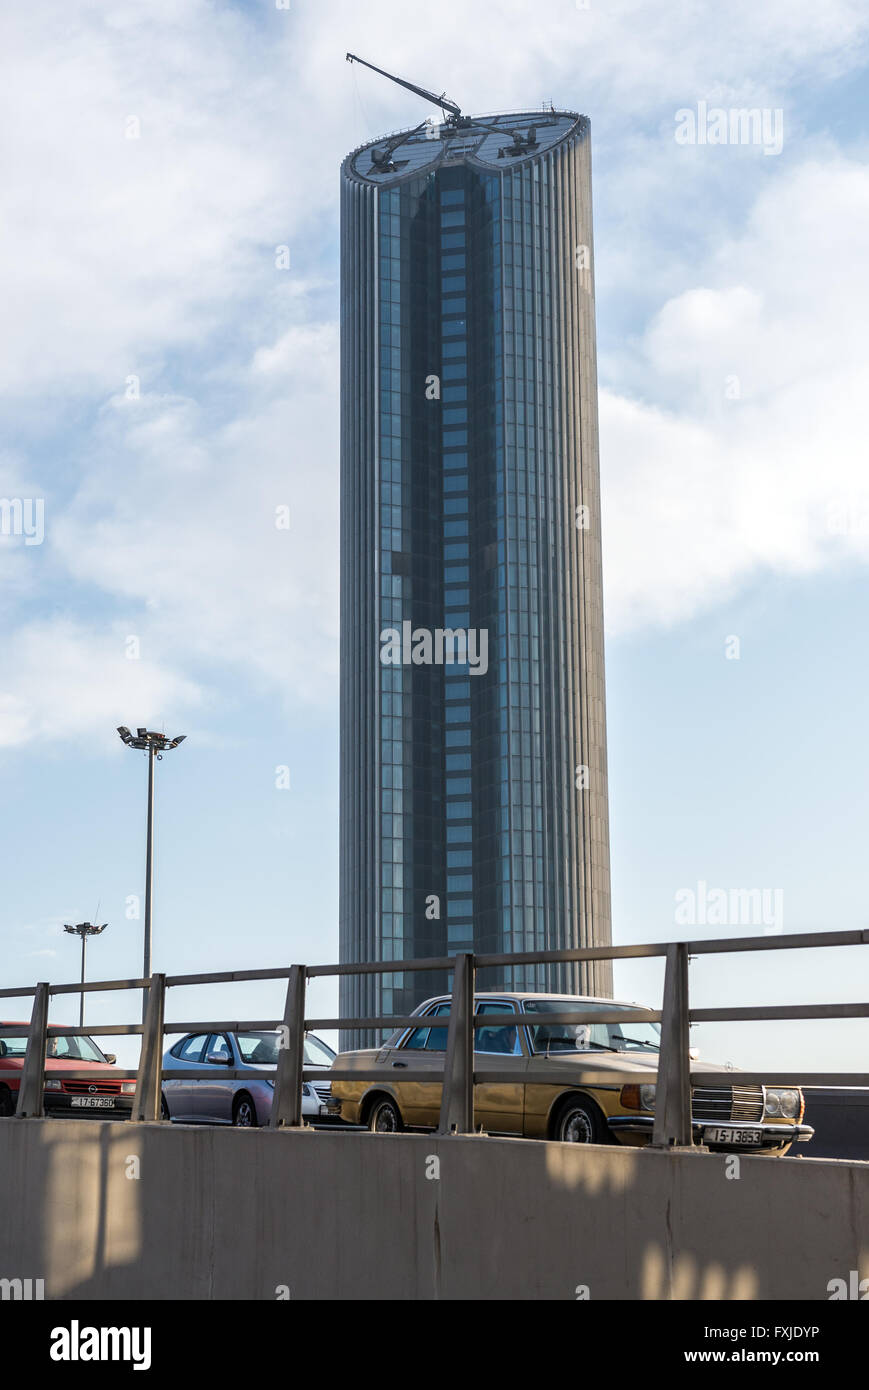 Amman Rotana Hotel Tower part of Abdali Project in Amman city, capital of  Jordan Stock Photo - Alamy